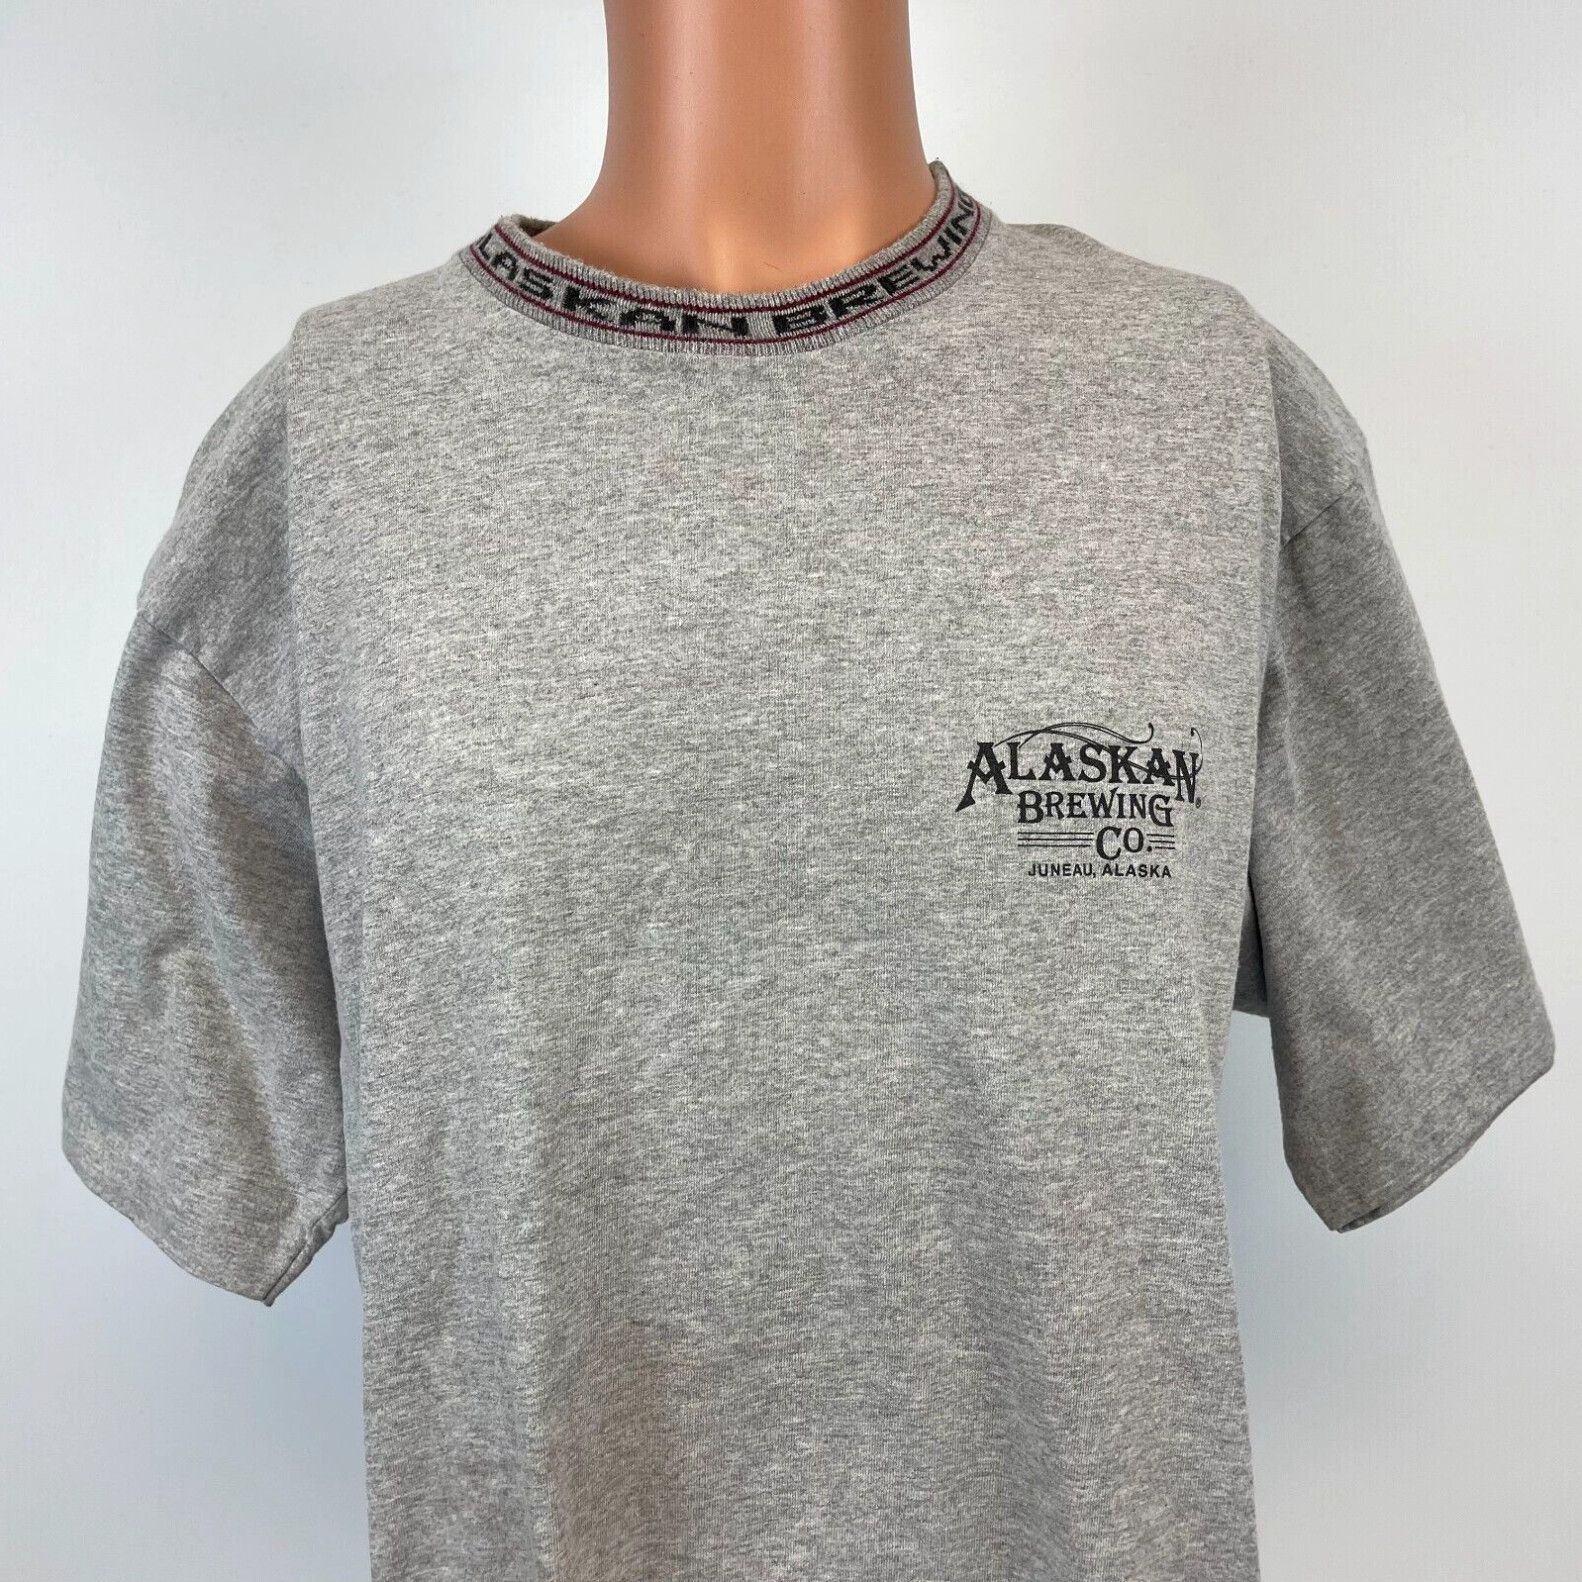 Vintage Alaskan Brewing Company Juneau Alaska Single Stitch T Shirt Vtg 90s Made USA XL Size US XL / EU 56 / 4 - 1 Preview